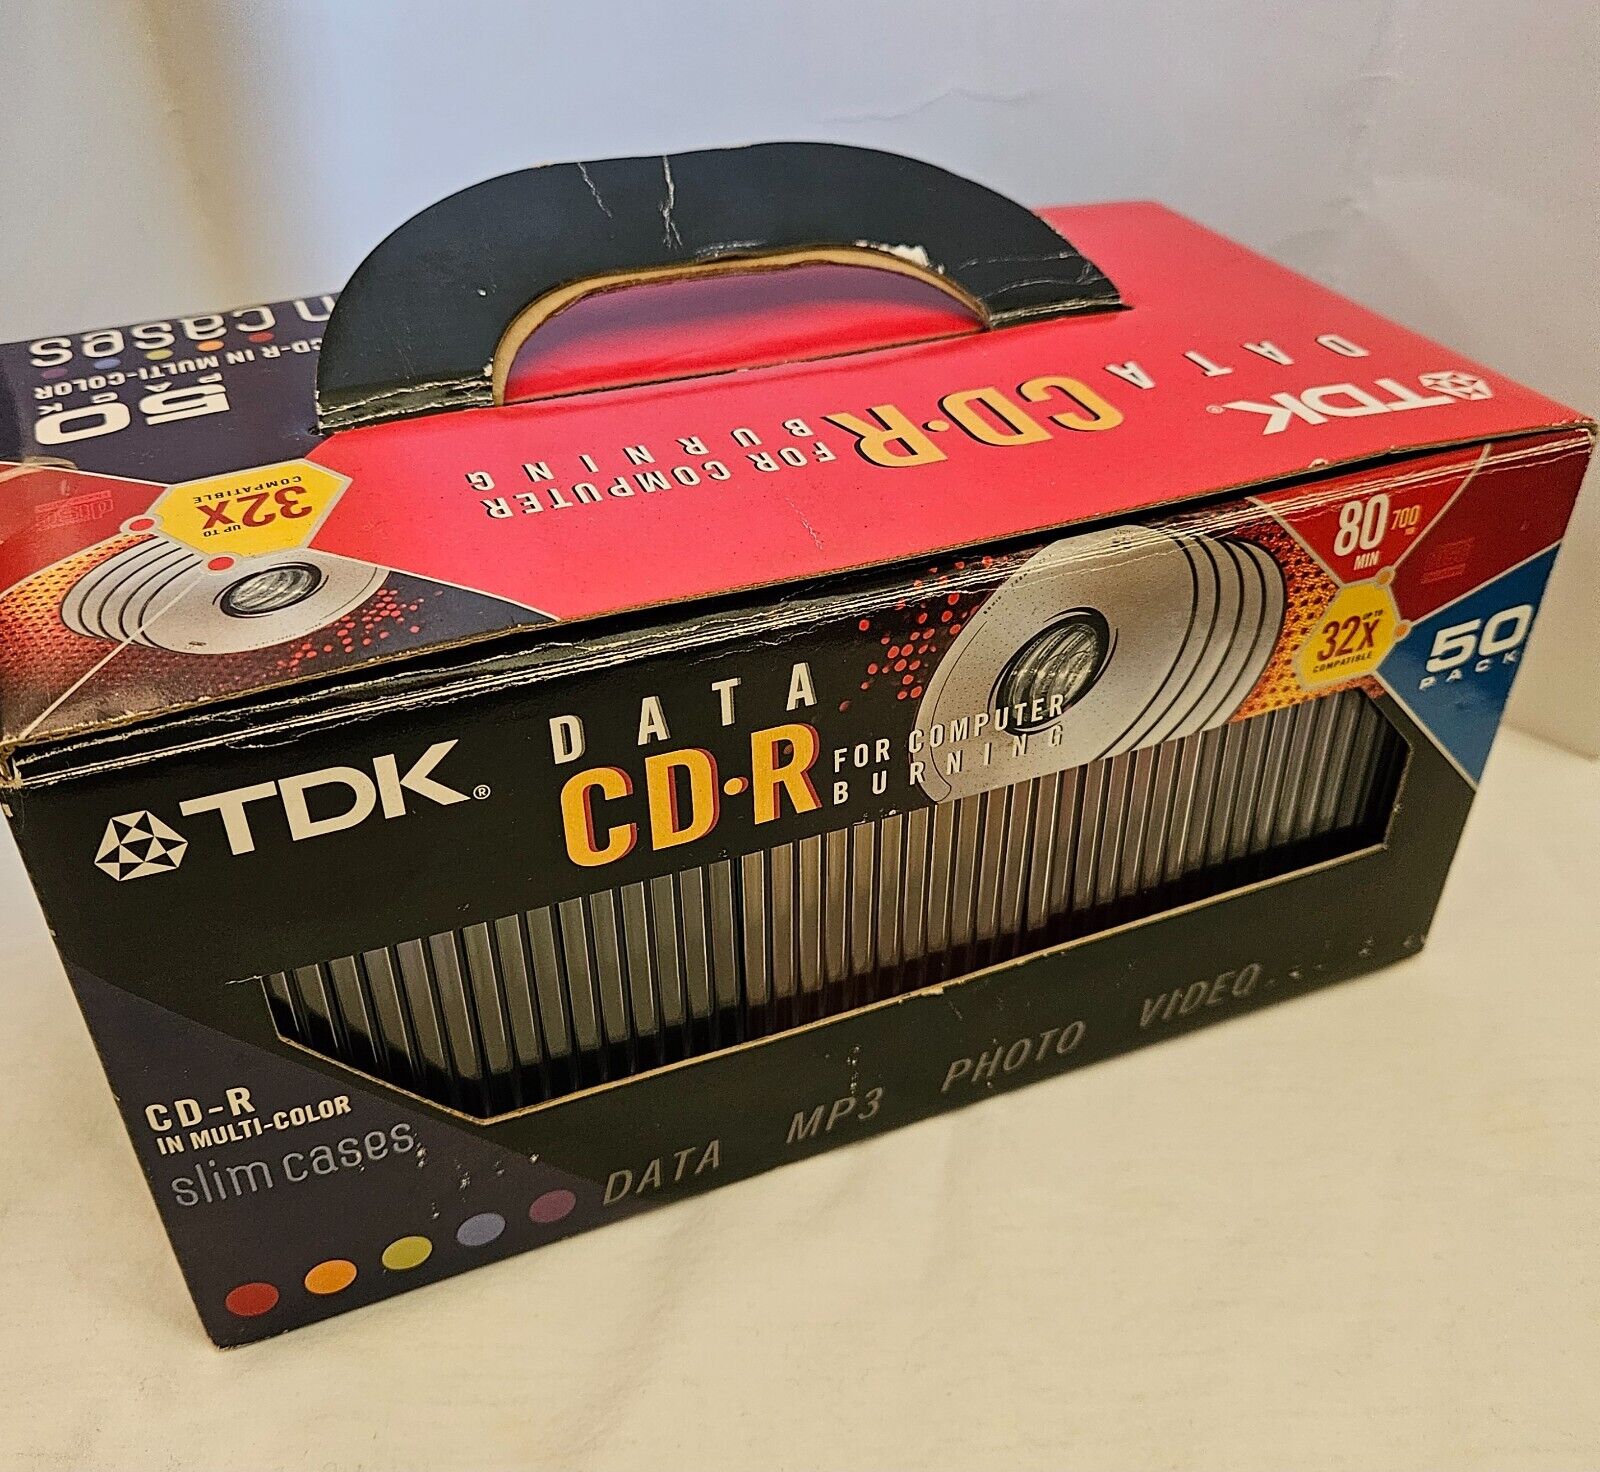 TDK CD-R 80 Min 700 MB 32X, Case 50 Pack, New, Open Box